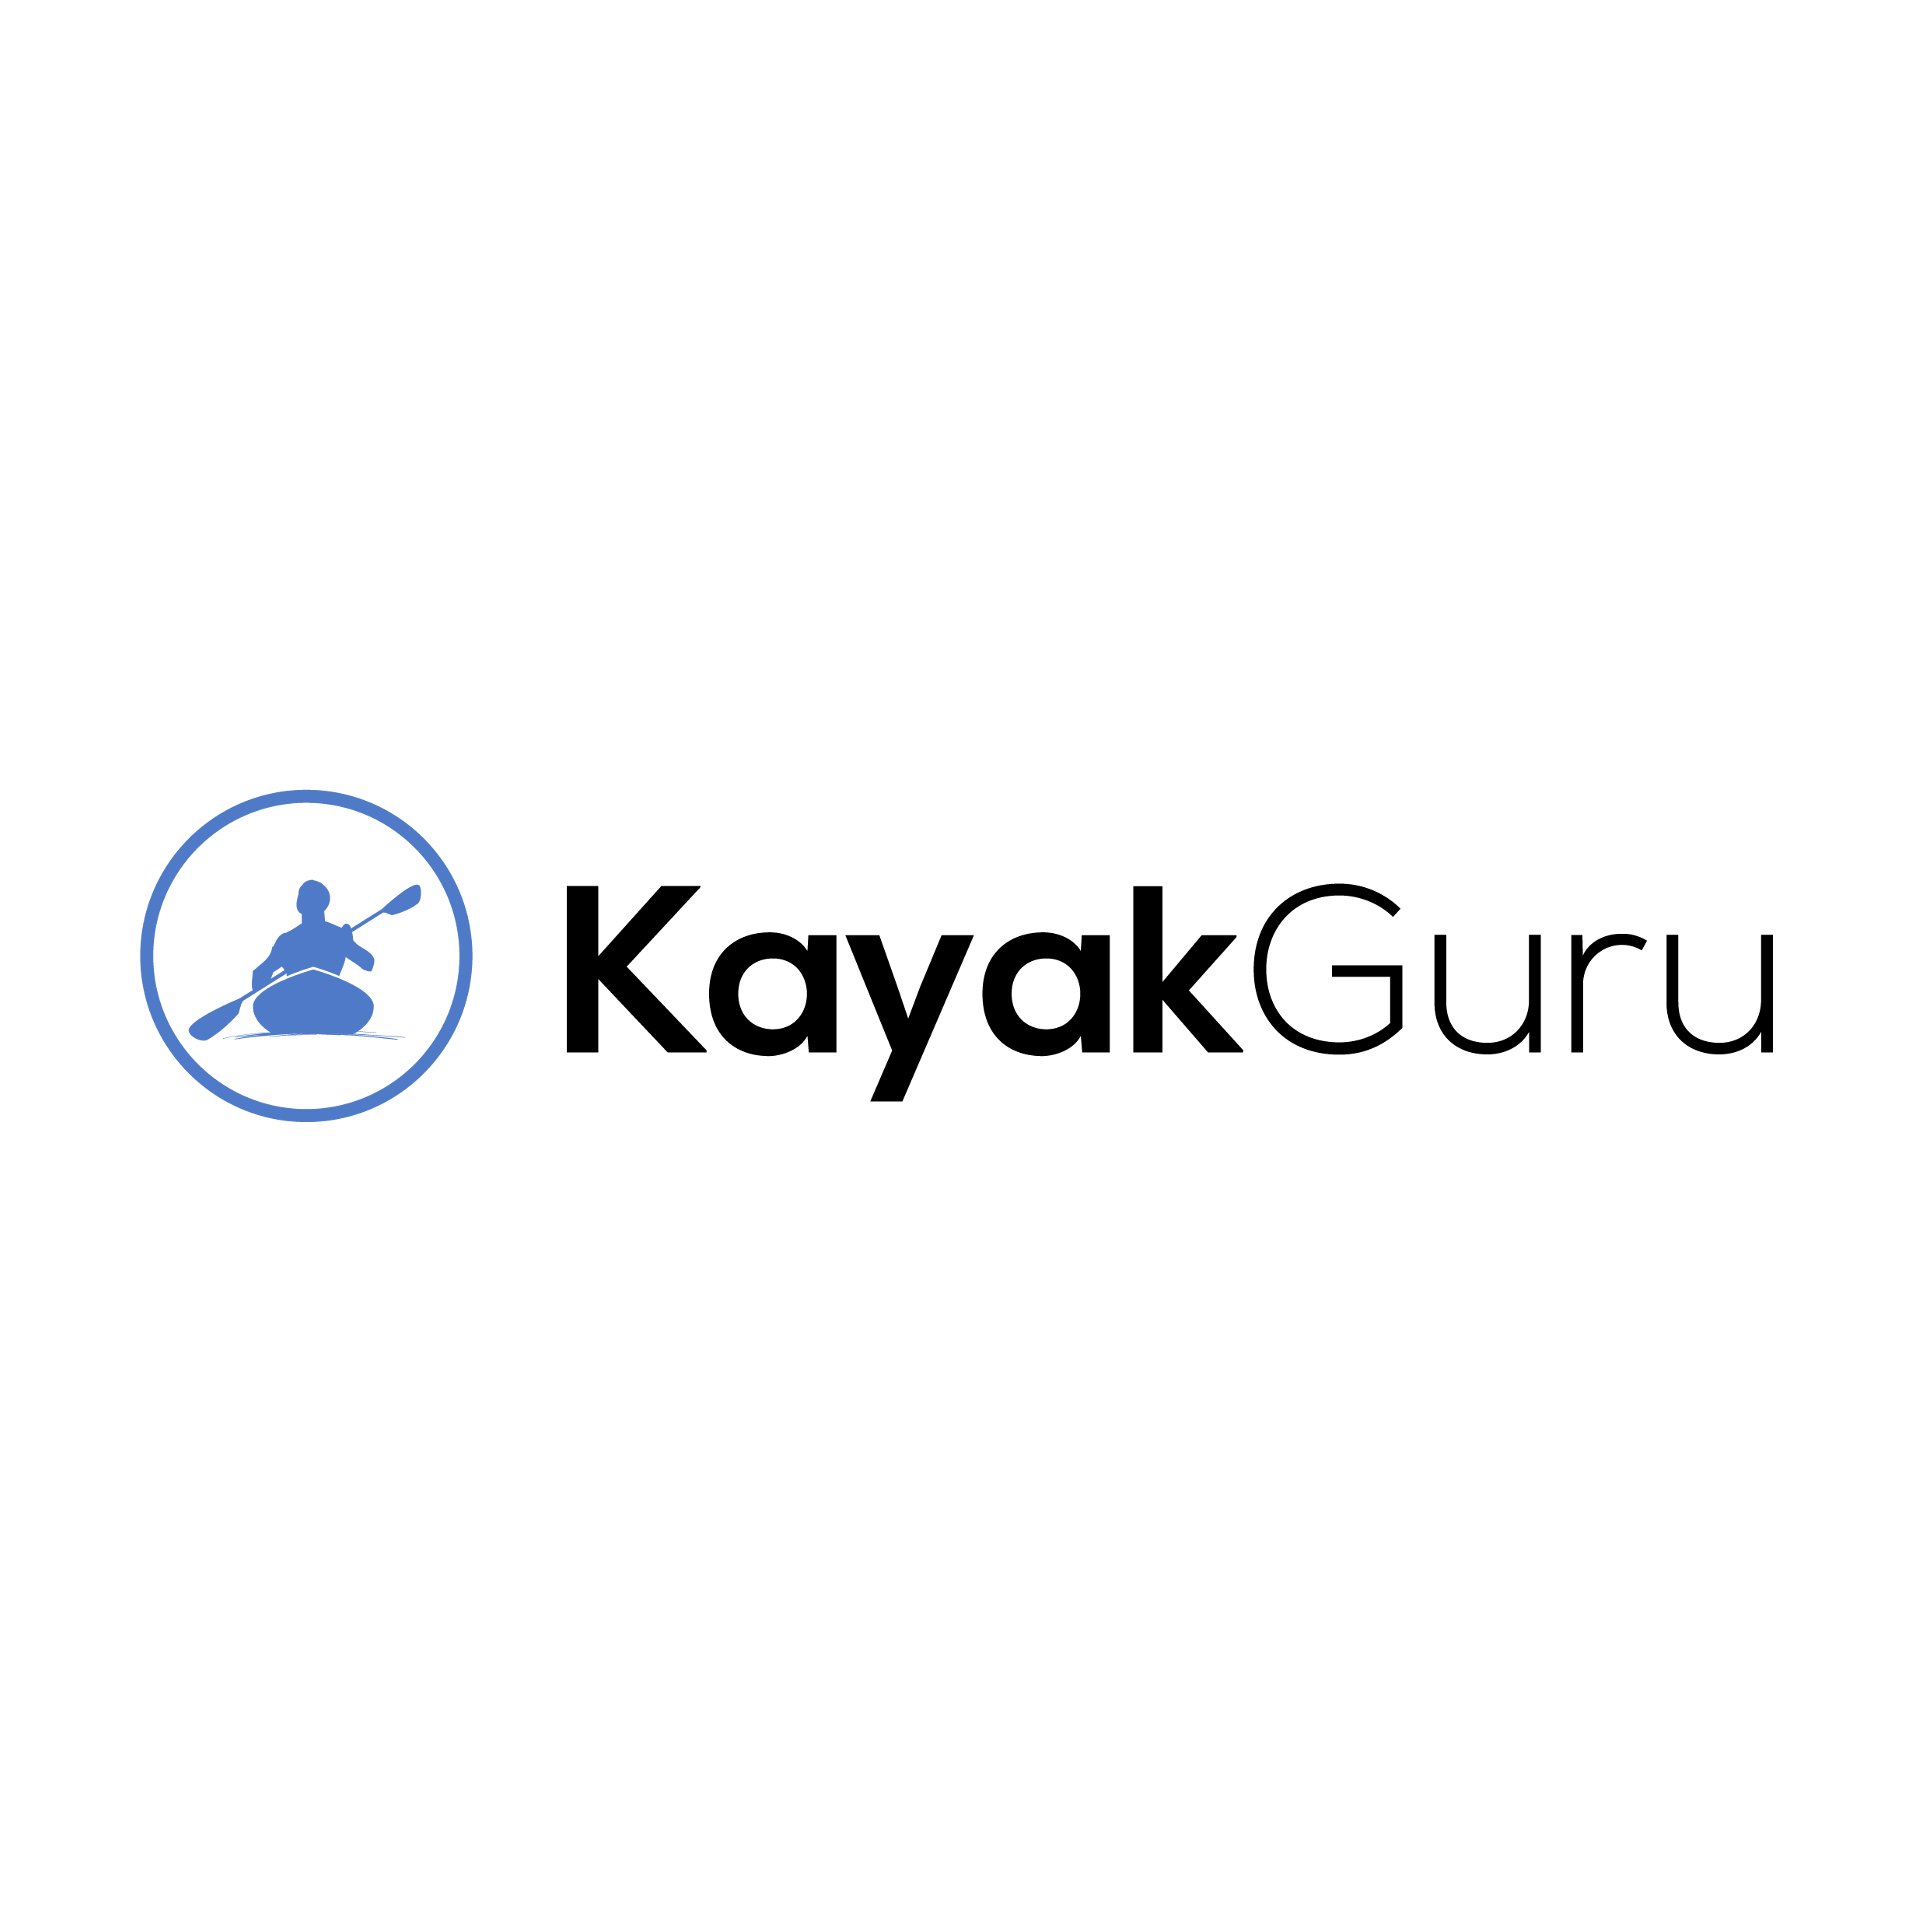 KayakGurucom Profile Picture